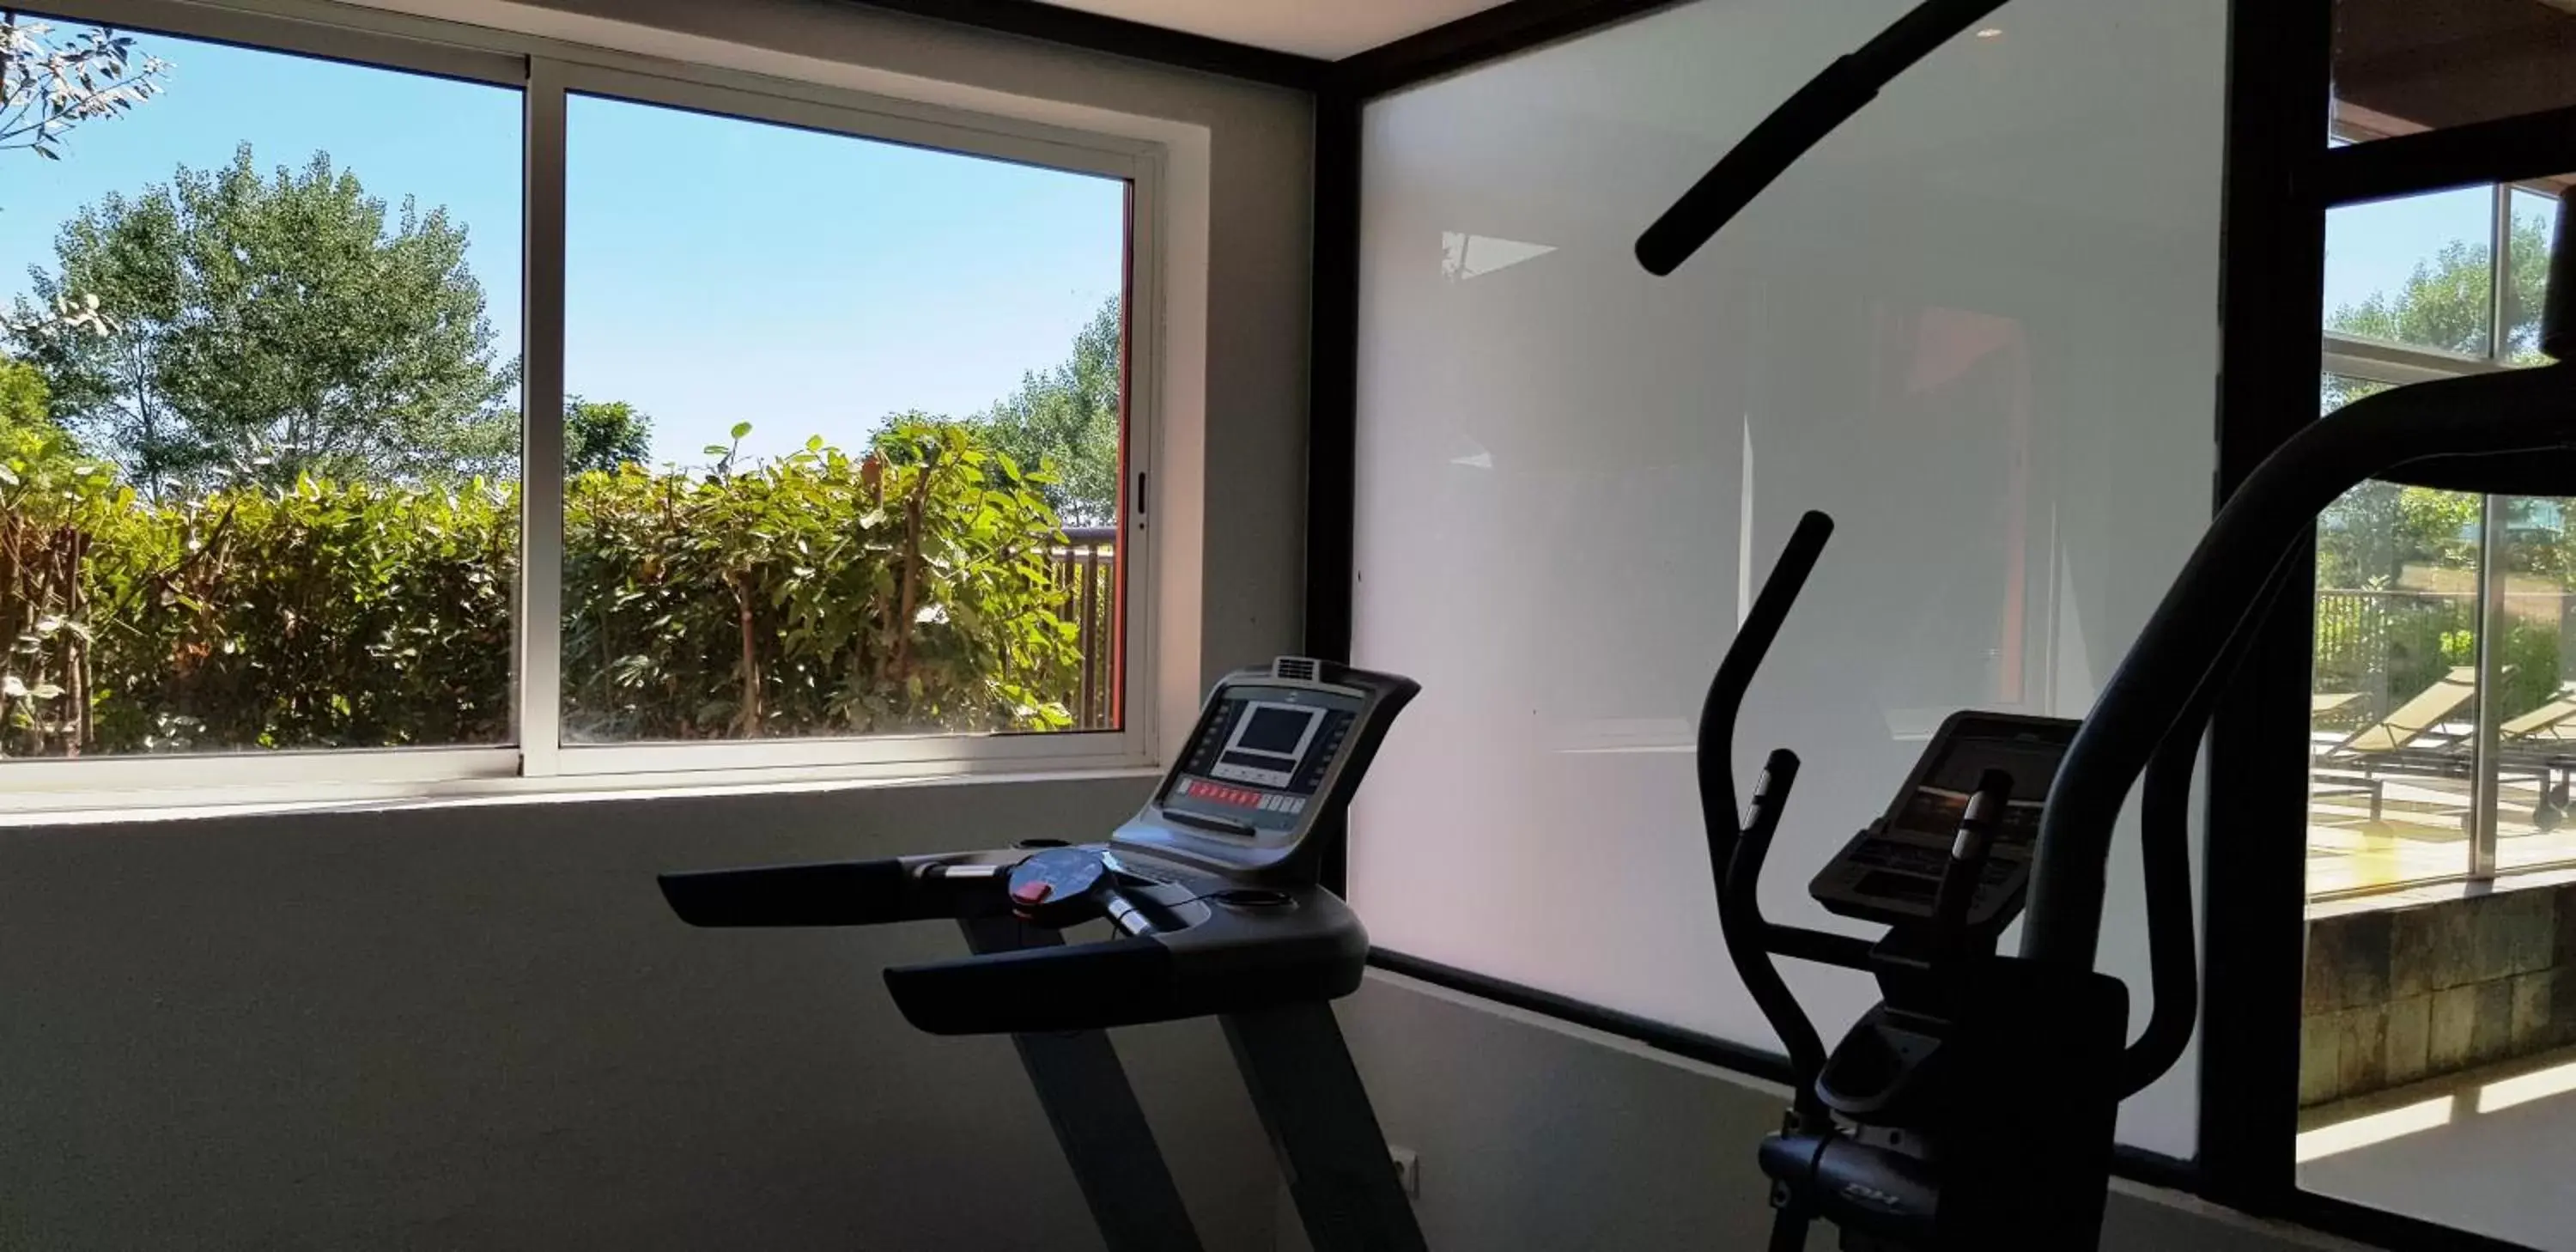 Fitness centre/facilities, Fitness Center/Facilities in Hotel Da Montanha